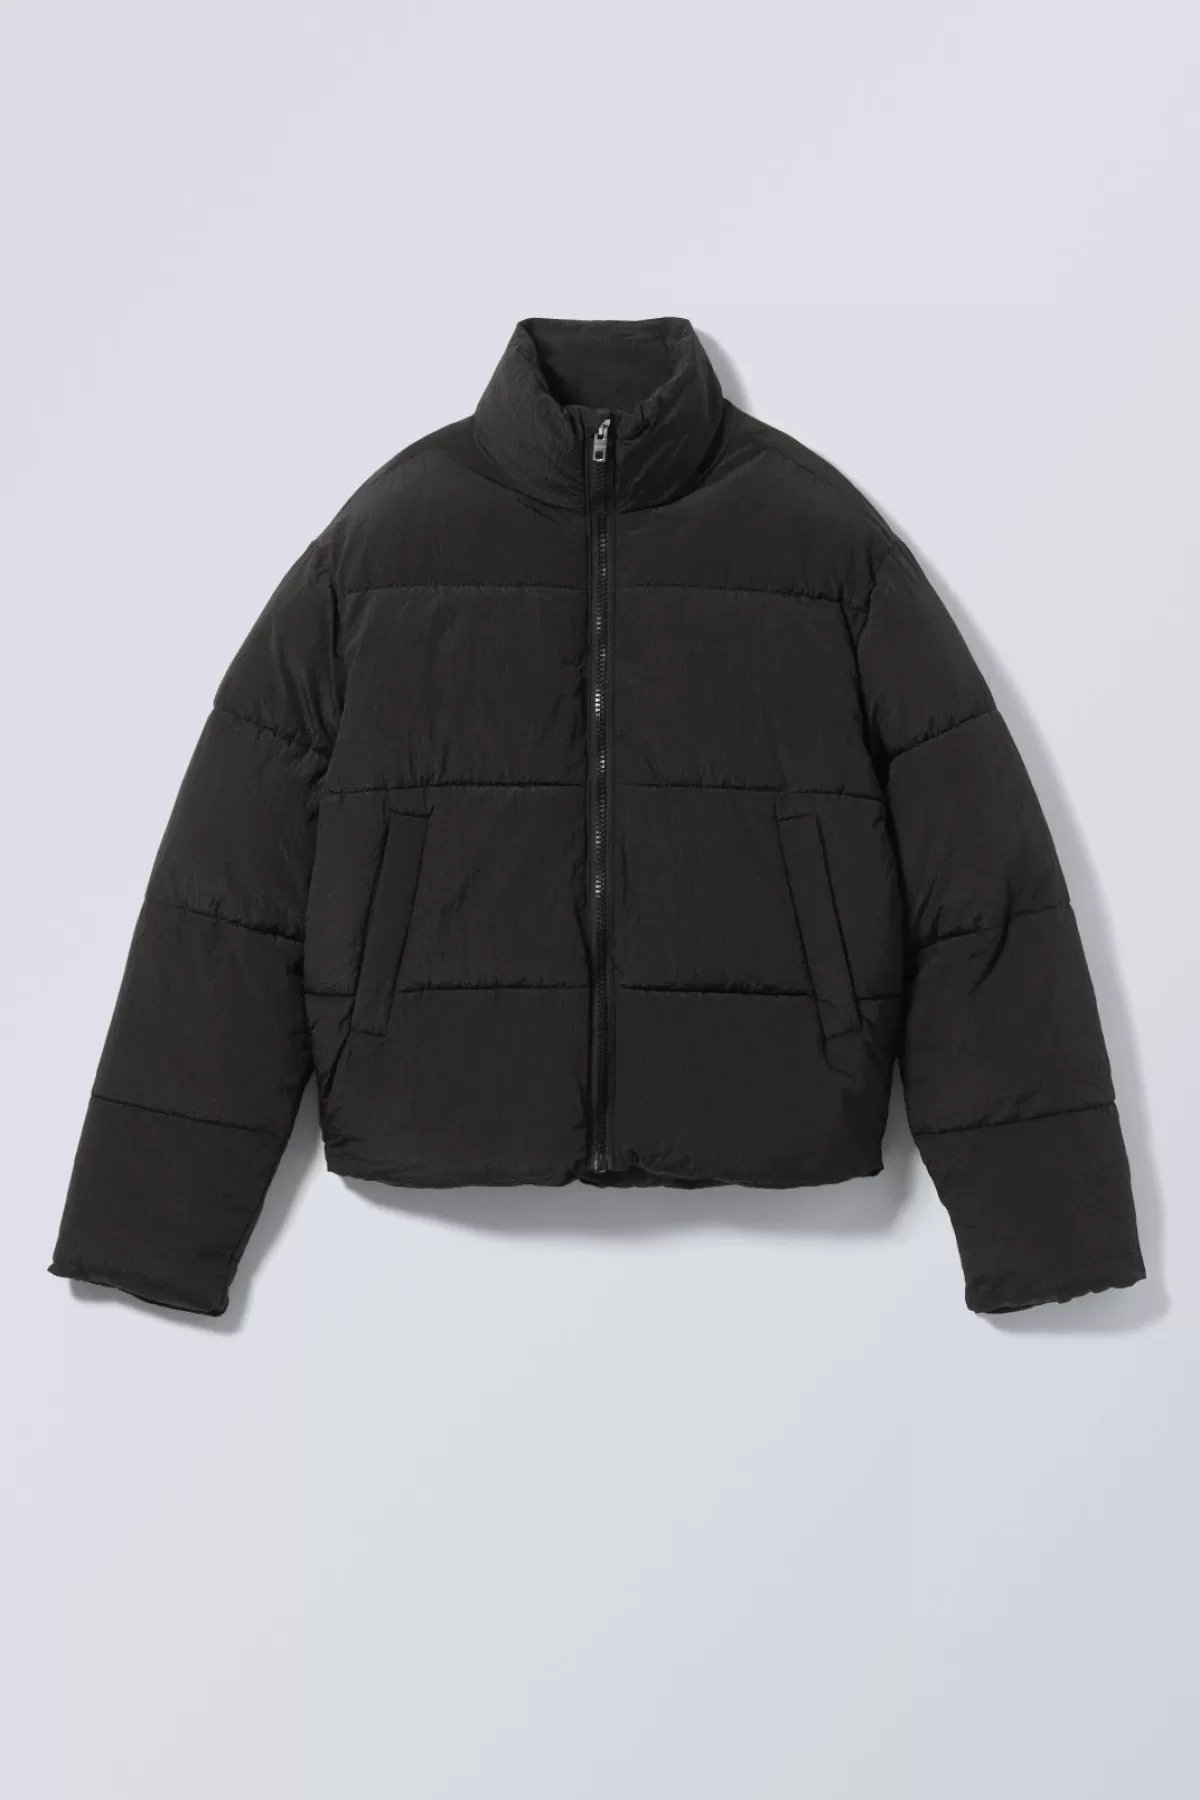 Weekday Ben Ripstop Puffer Jacket Black Outlet